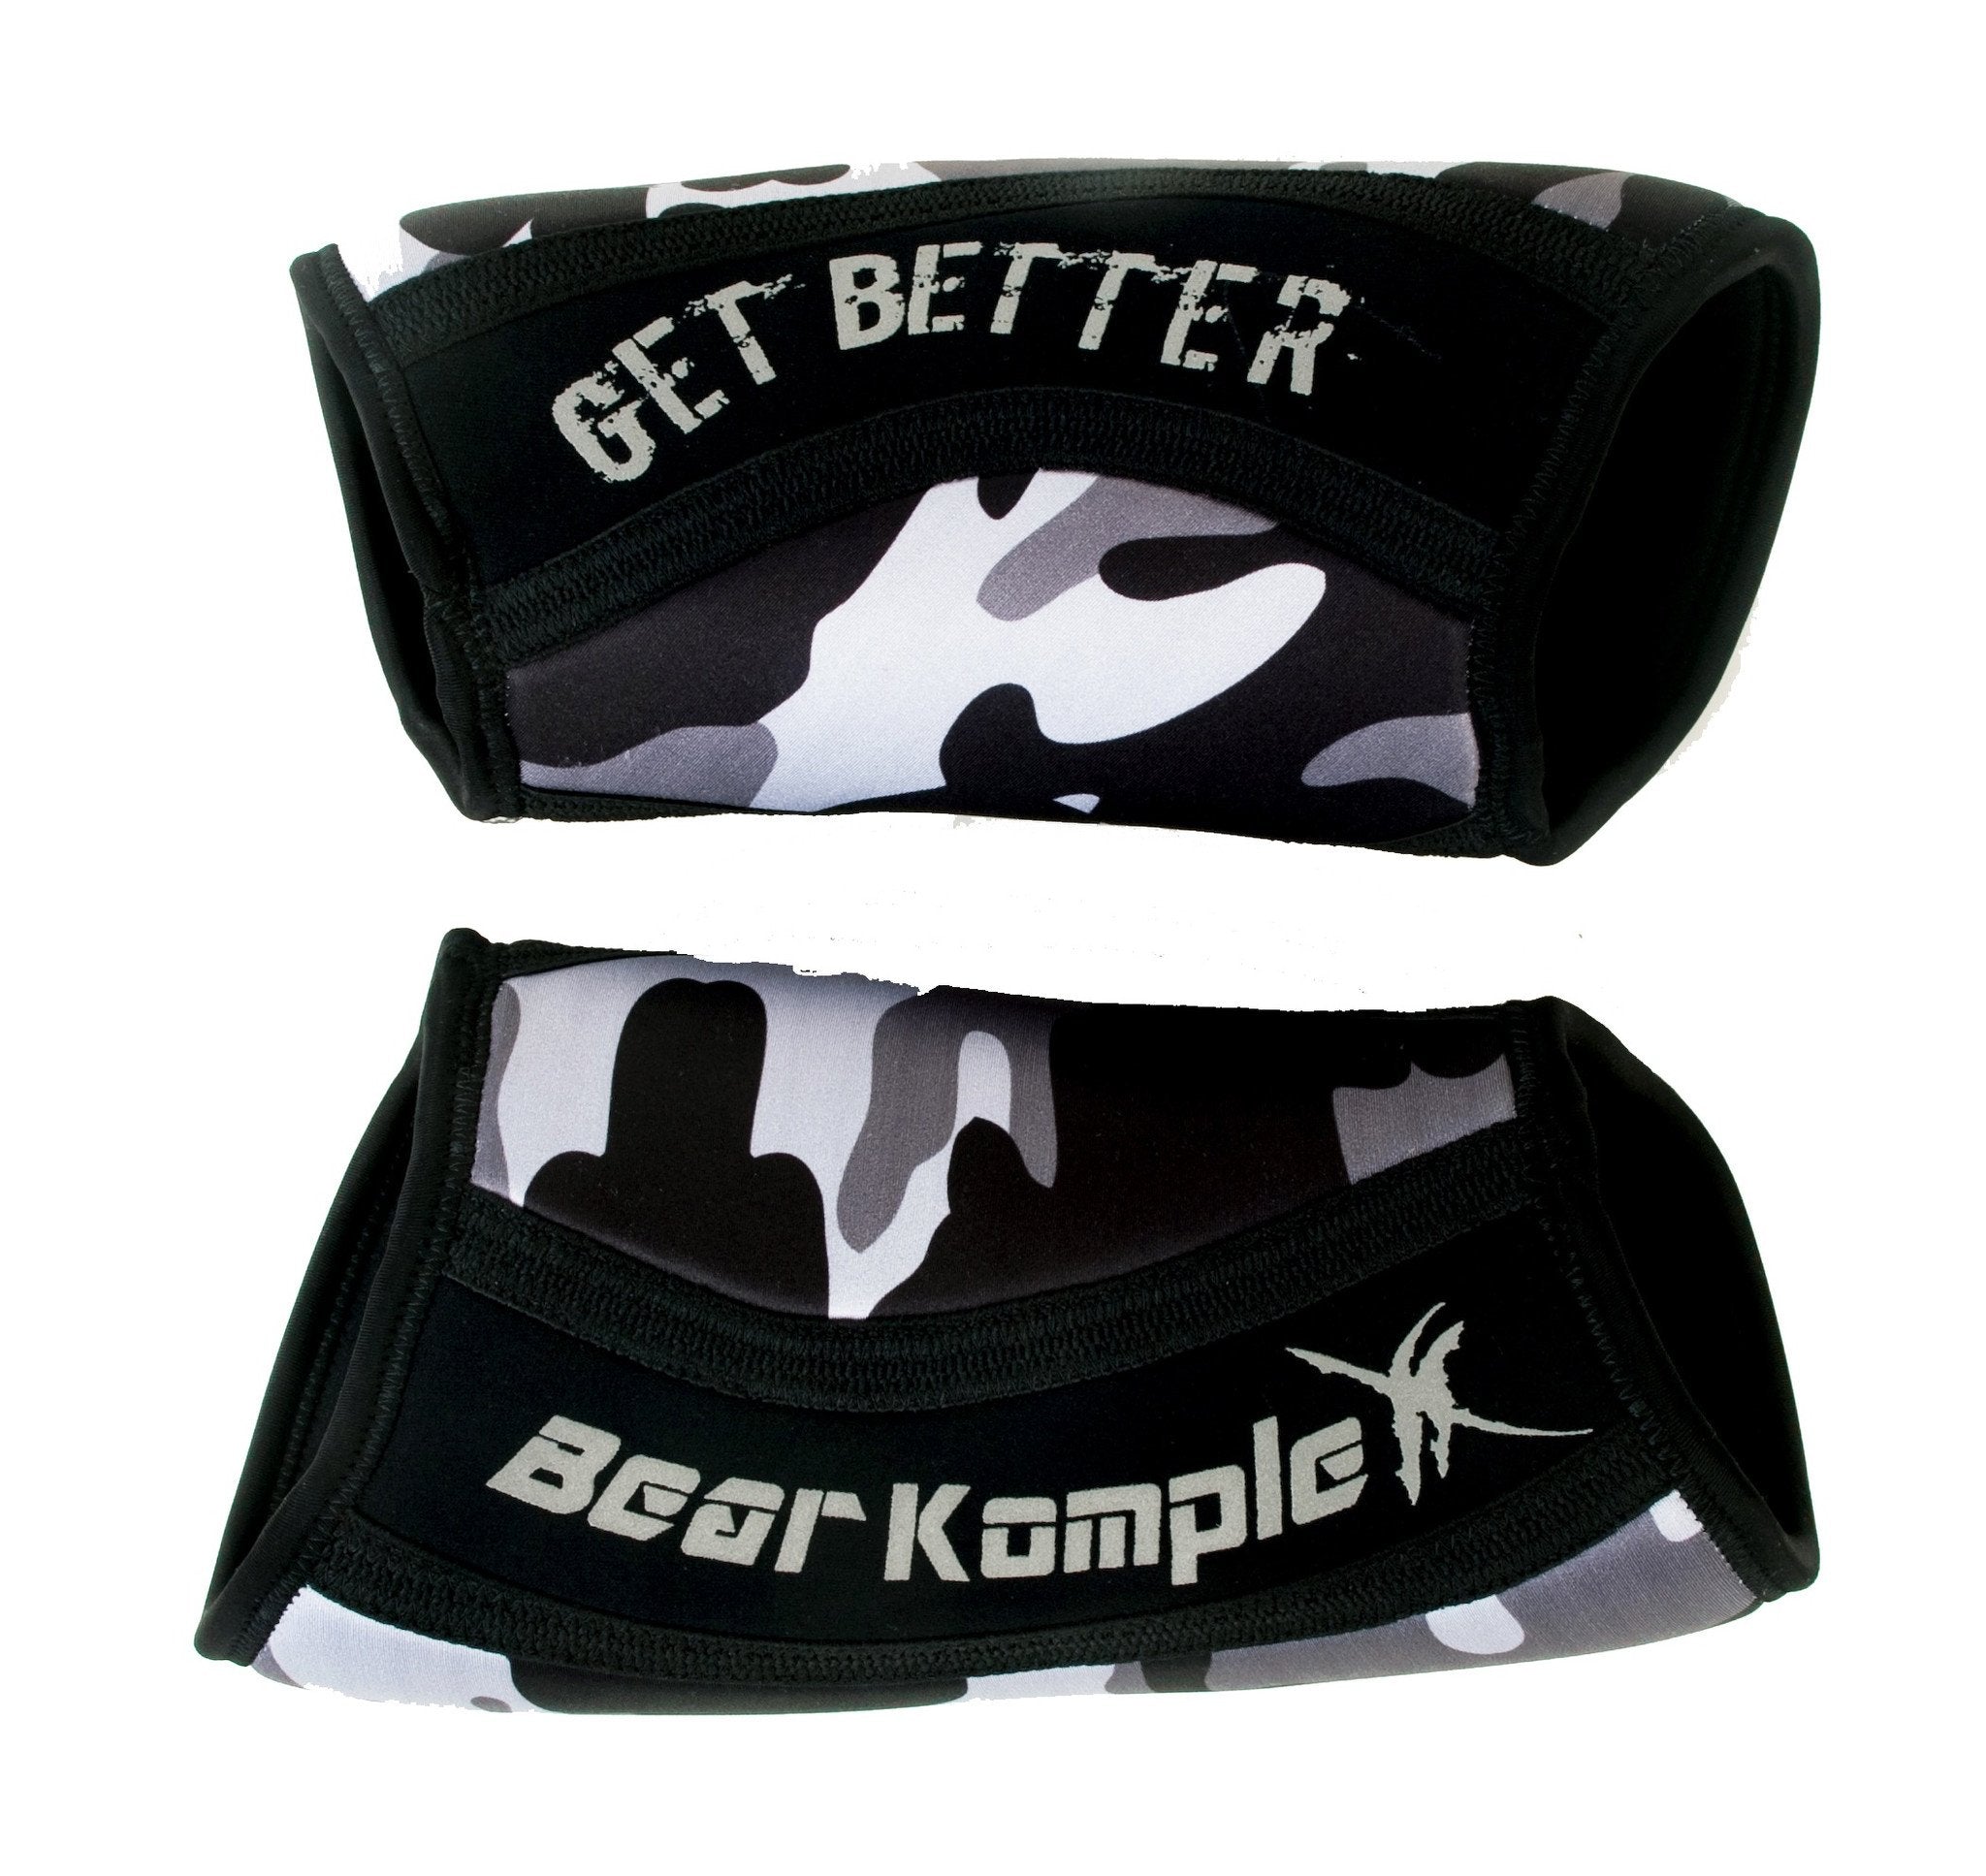 Bear KompleX Knee Sleeves - Black Camo from Bear Komplex for Genejack WOD